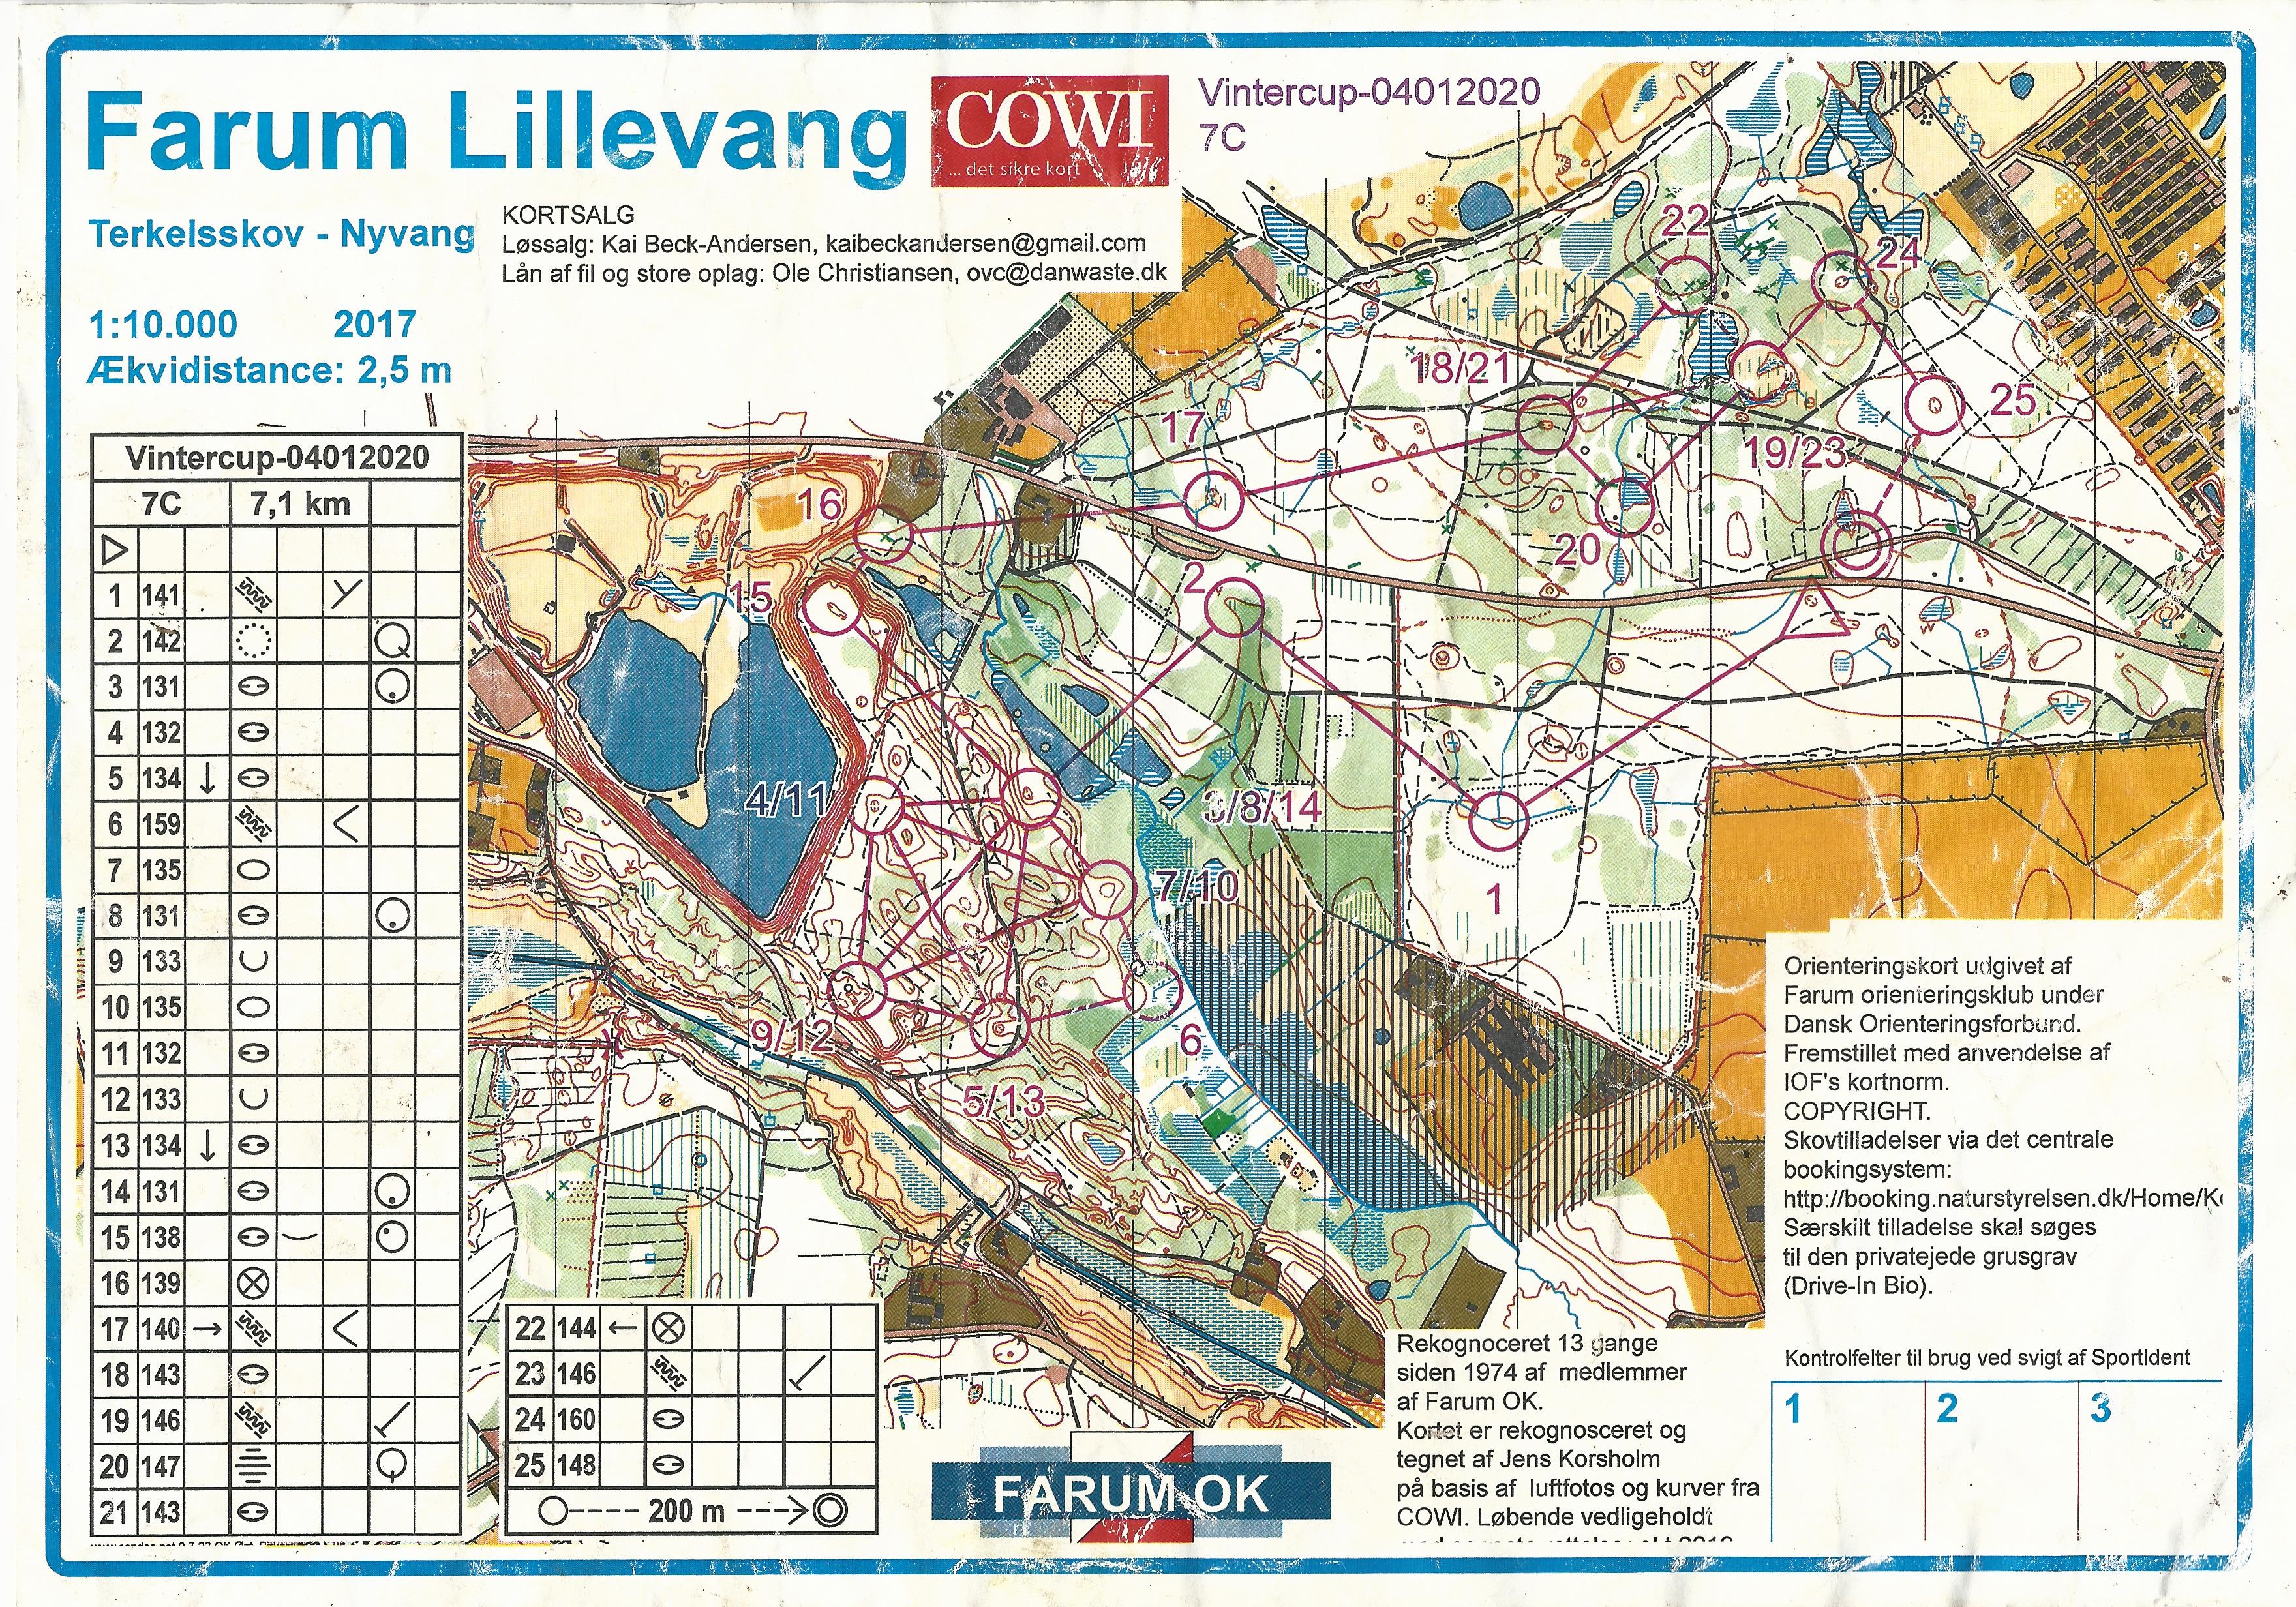 Vintercup, Farum Lillevang, H40 (04-01-2020)